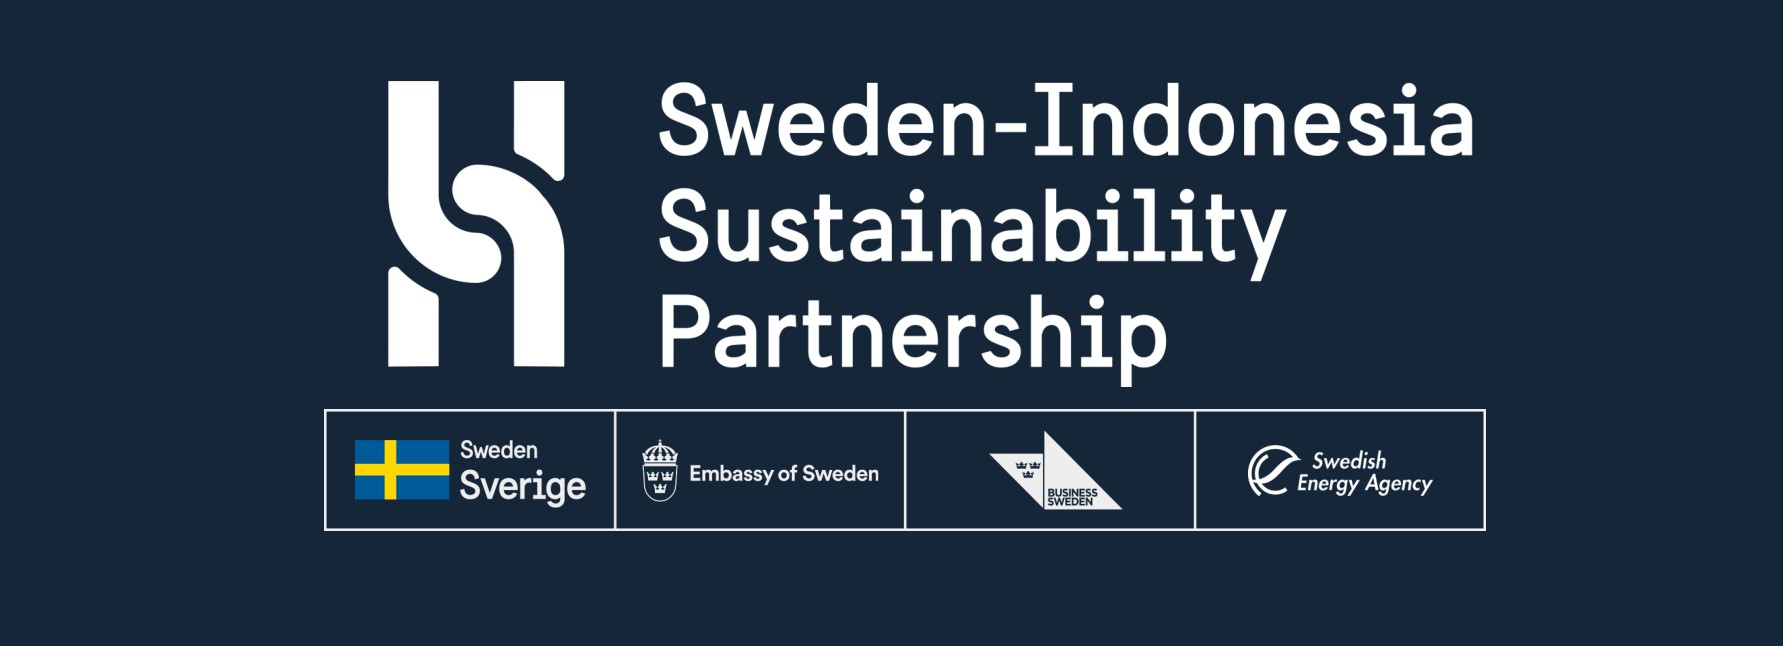 Header image for Sweden-Indonesia Sustainability Partnership 2022